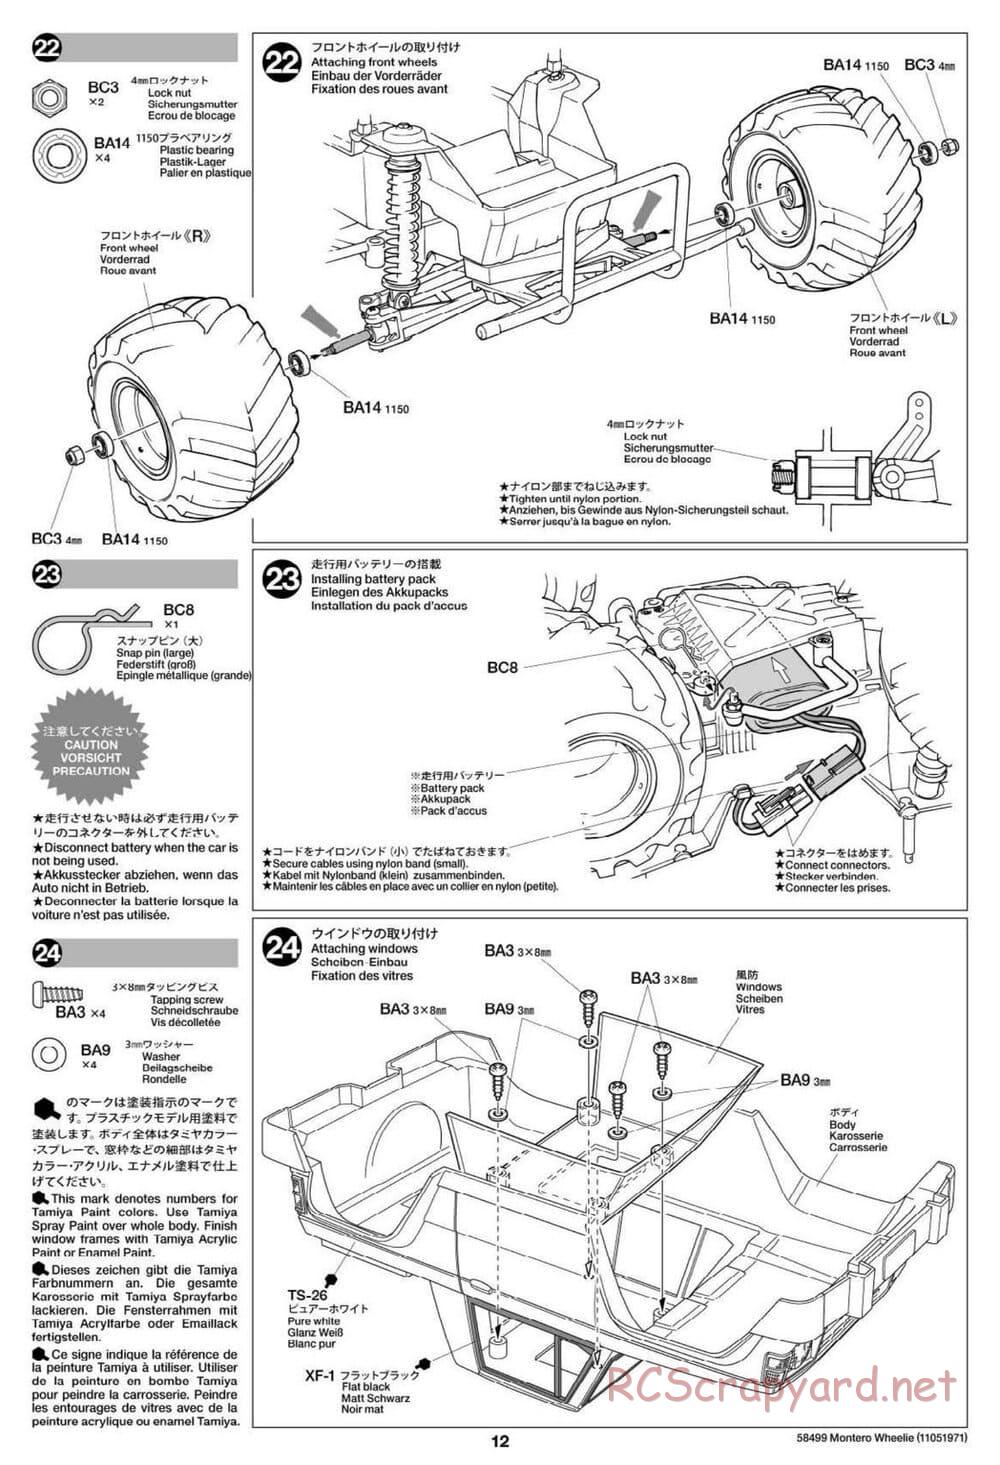 Tamiya - Mitsubishi Montero Wheelie - CW-01 Chassis - Manual - Page 12